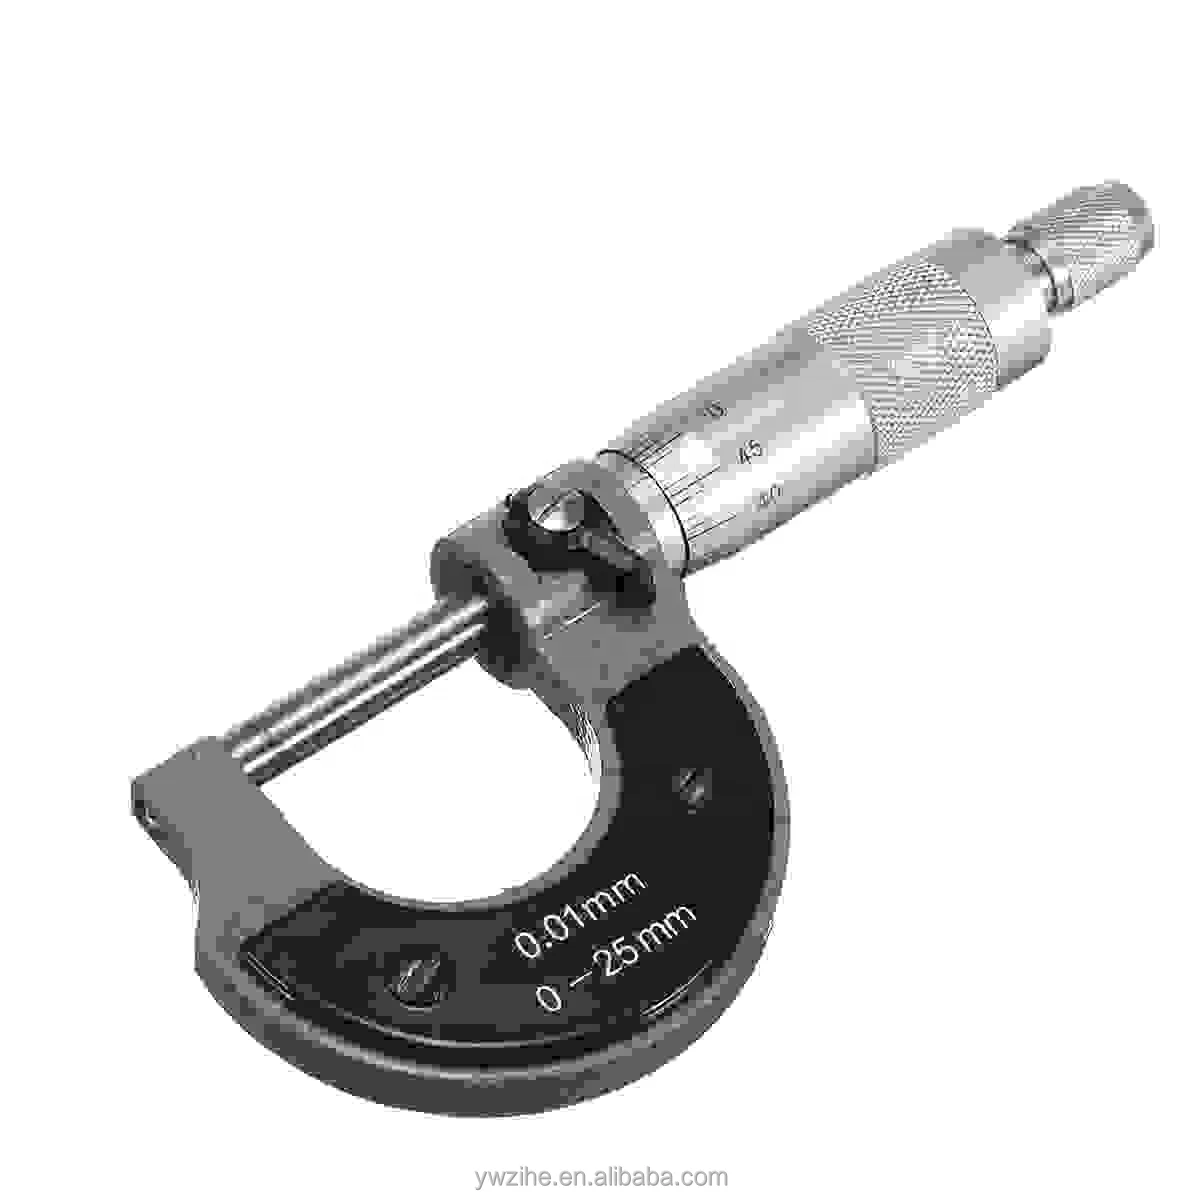 0-25mm Outside External Micrometer Metric Gauge Caliper Measuring Tool With Box 